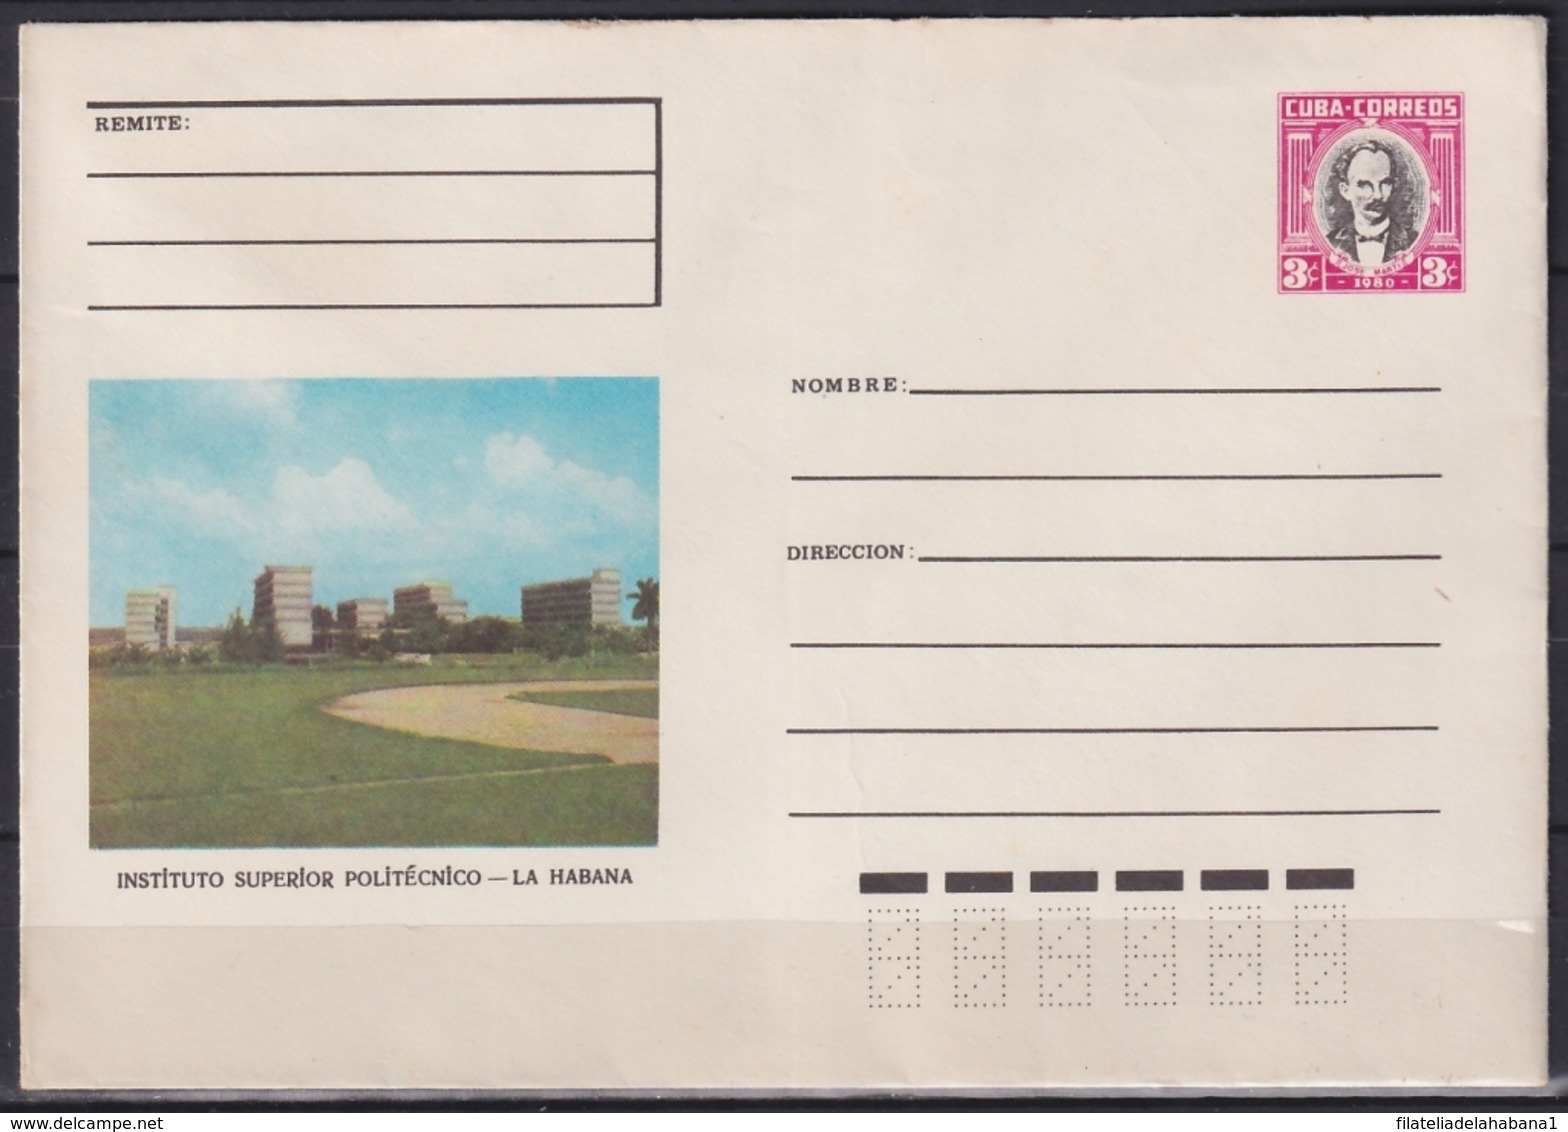 1980-EP-151 CUBA 1980 3c POSTAL STATIONERY COVER. HAVANA, INSTITUTO SUPERIOR POLITECNICO. - Briefe U. Dokumente